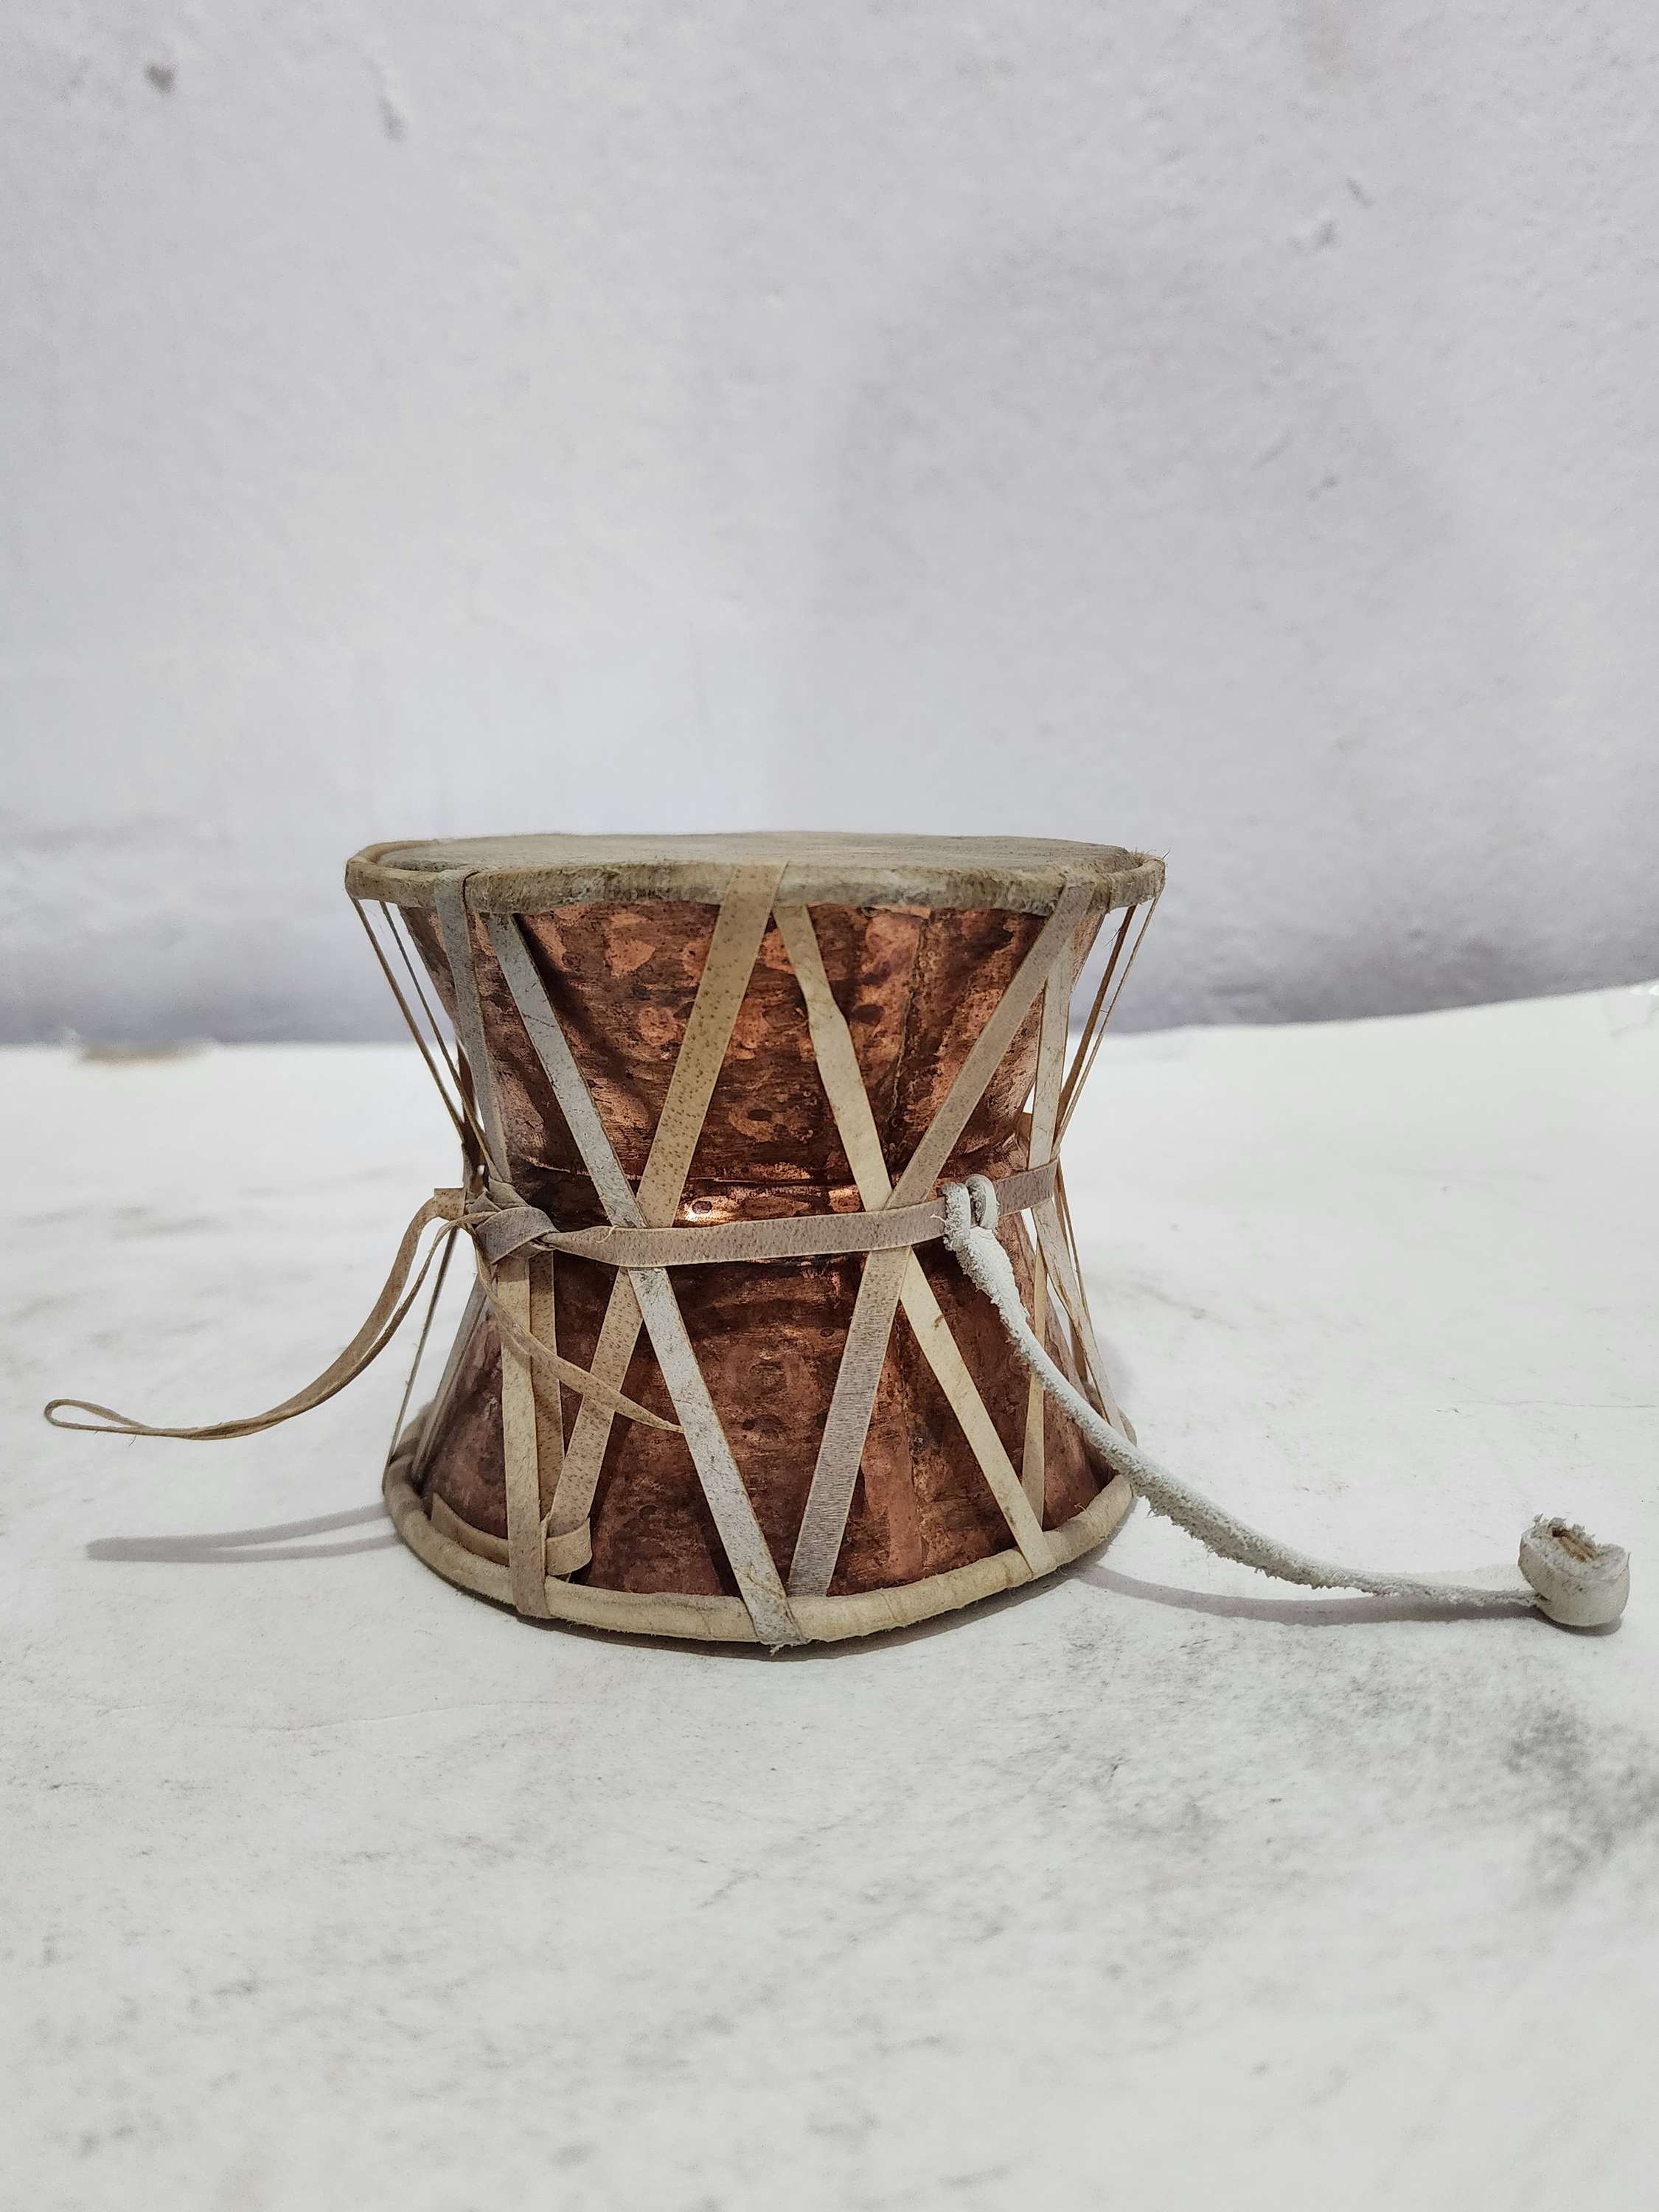 Mahadev Damaru, Nepali Folk Musical Instrument damaru, A Musical Instrument For Many Religious Practices, Made On A Copper Base